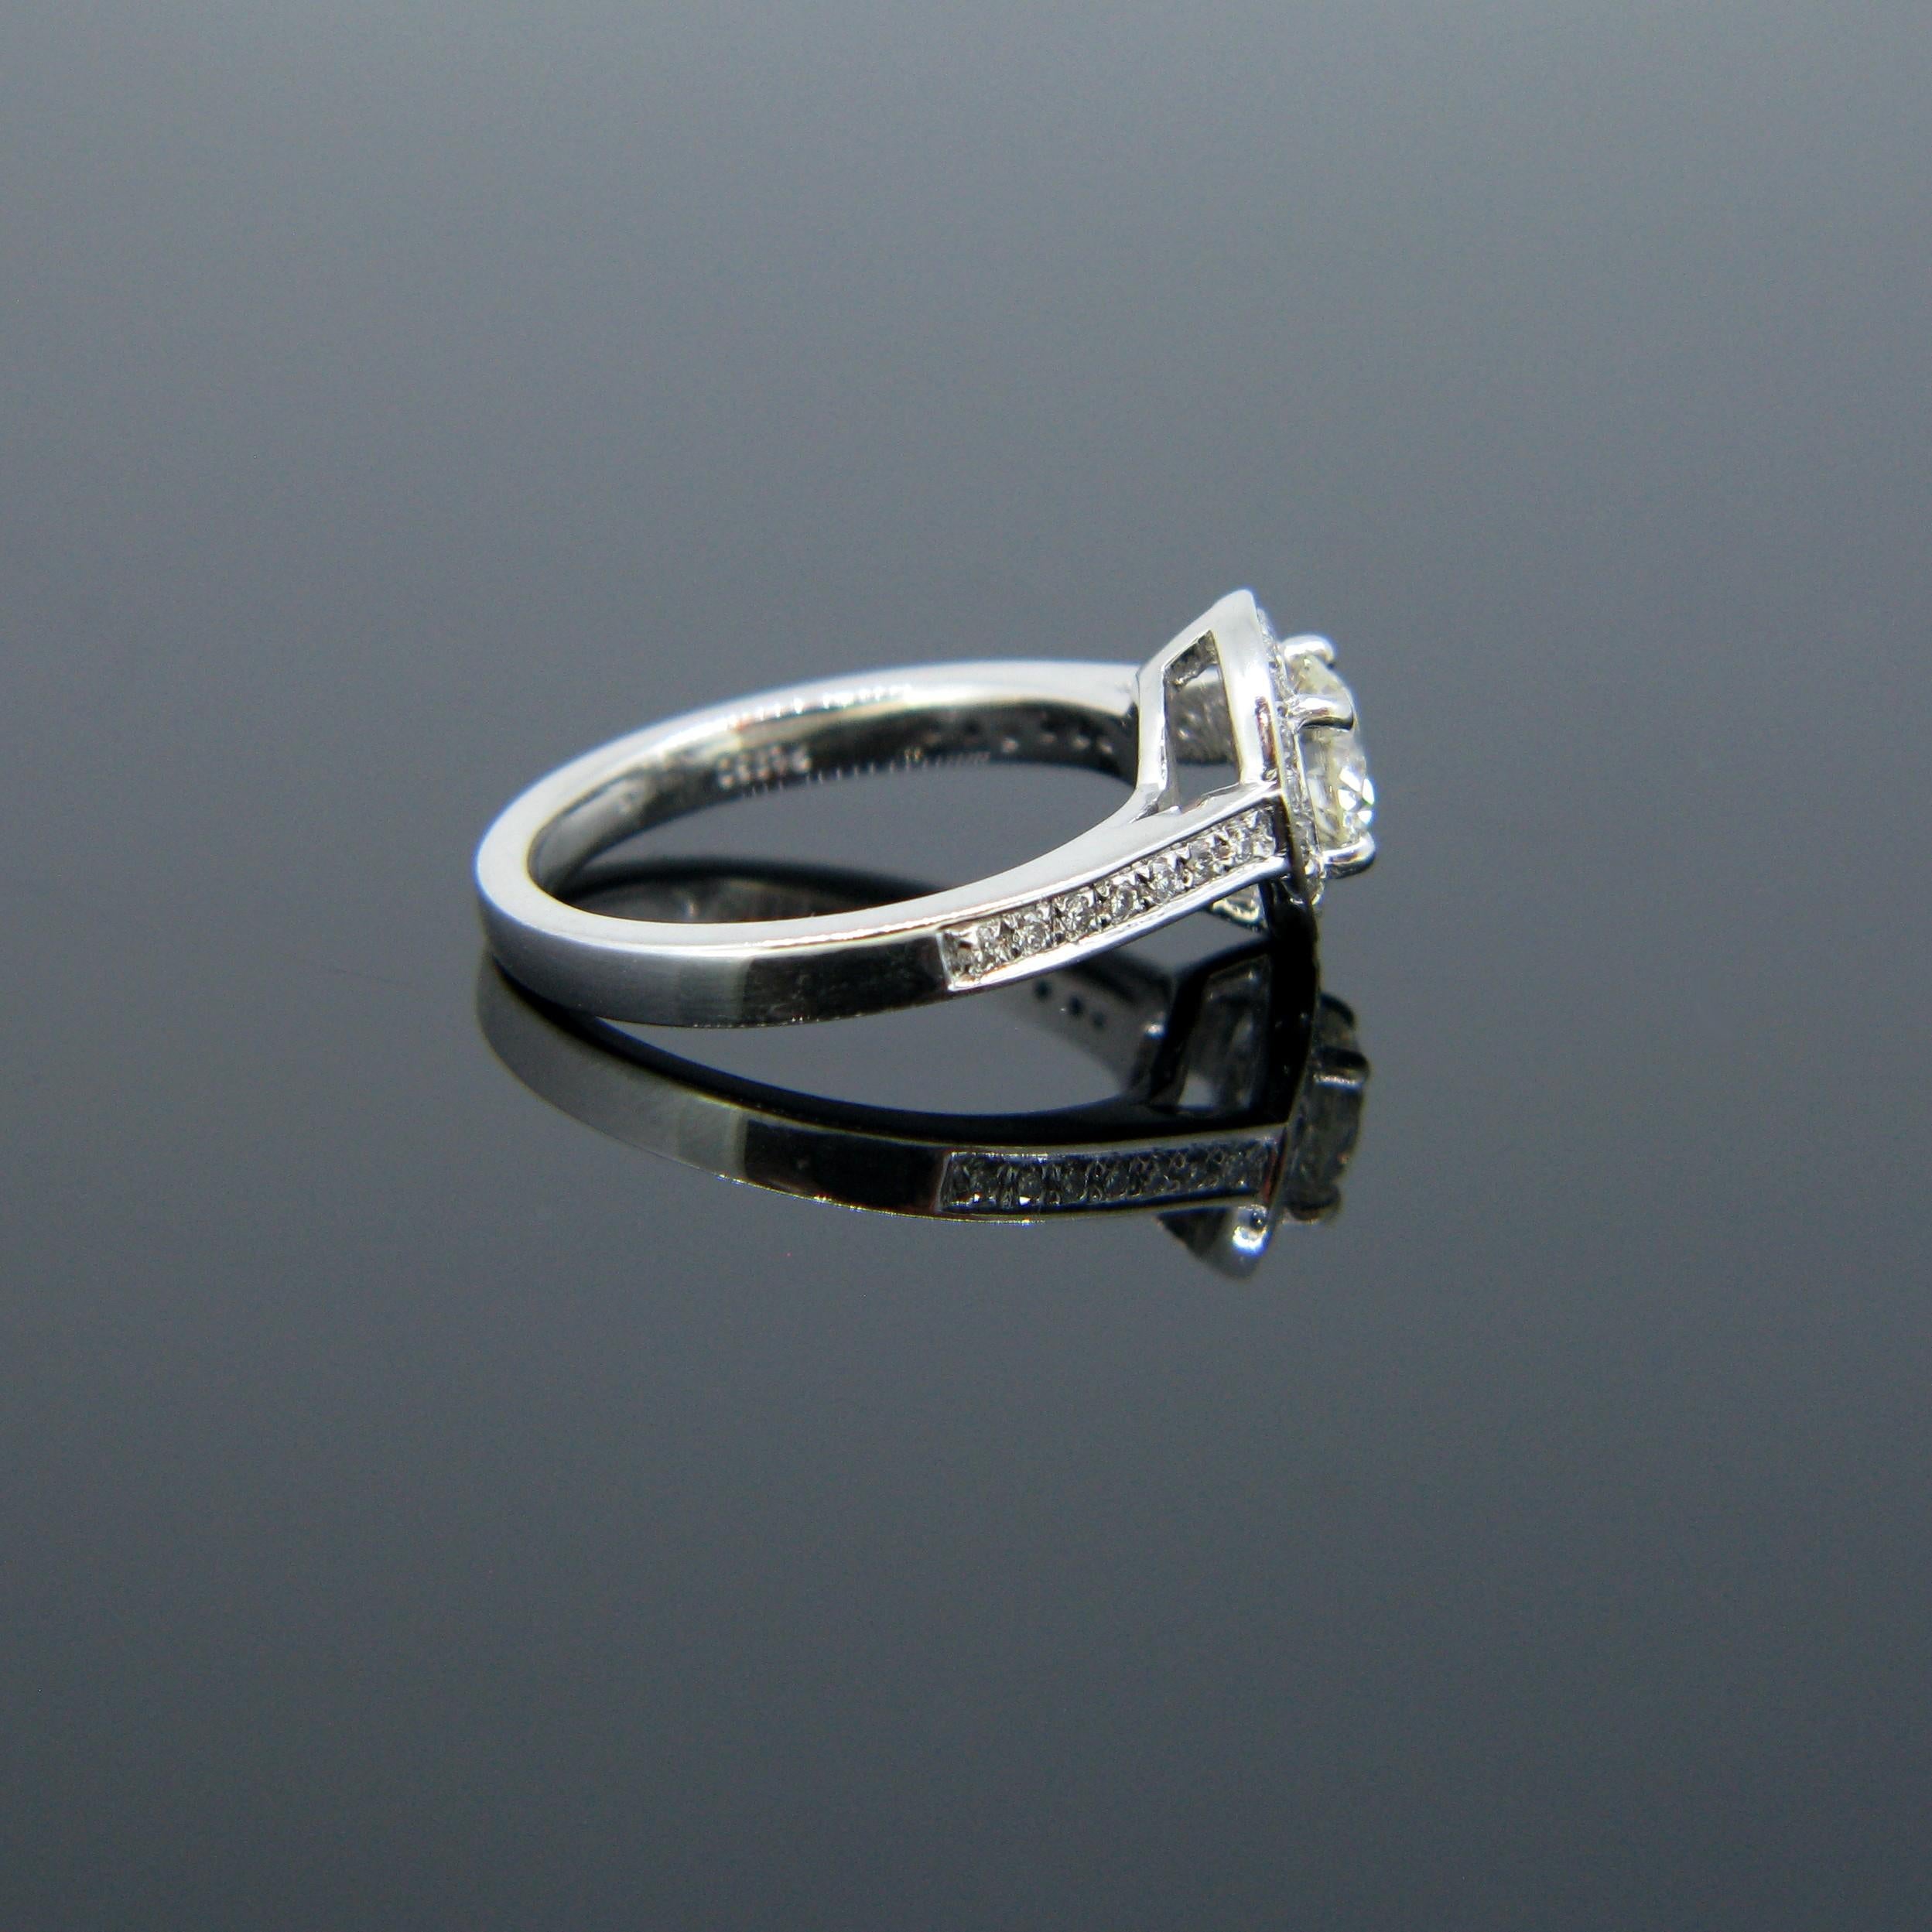 0.63 carat diamond ring